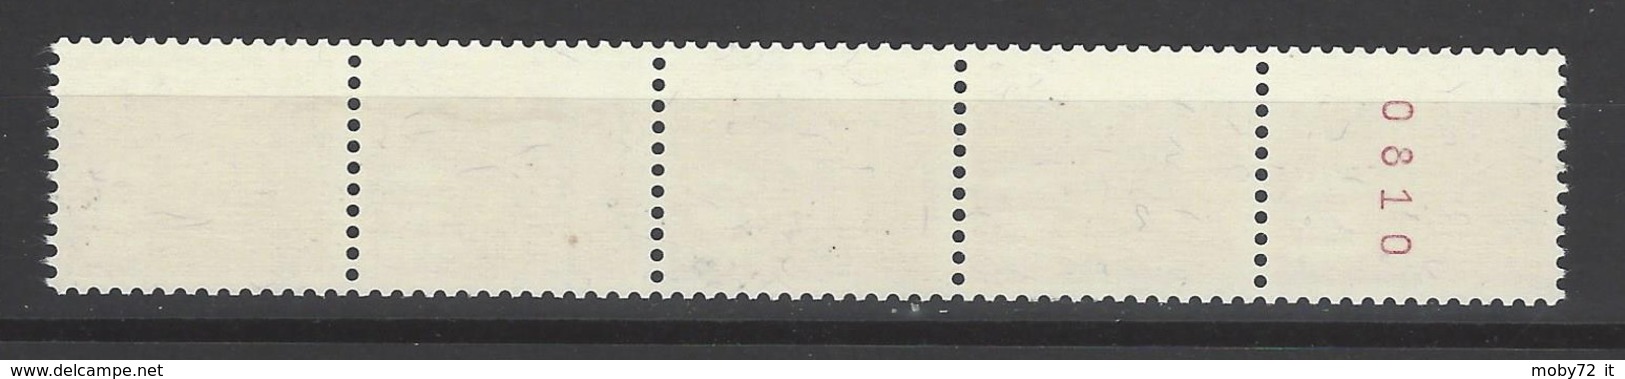 Svizzera - 1970 - Usato/used - Rollenmarken - Mi N. 933 - Francobolli In Bobina